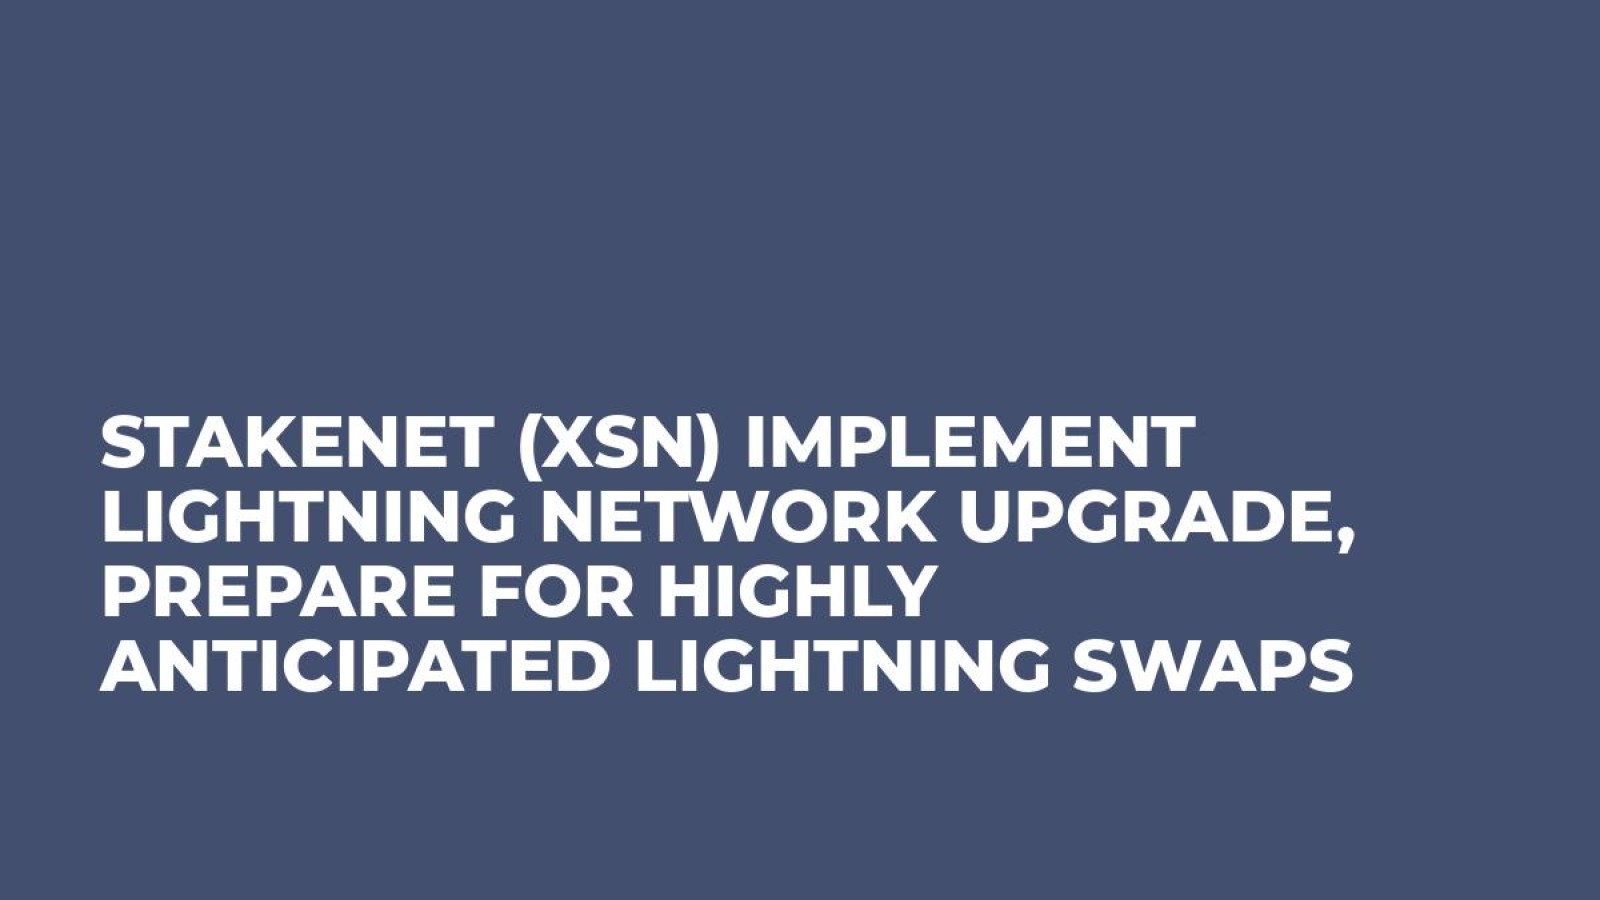 Stakenet (XSN) implement Lightning Network Upgrade, prepare for highly anticipated Lightning Swaps 